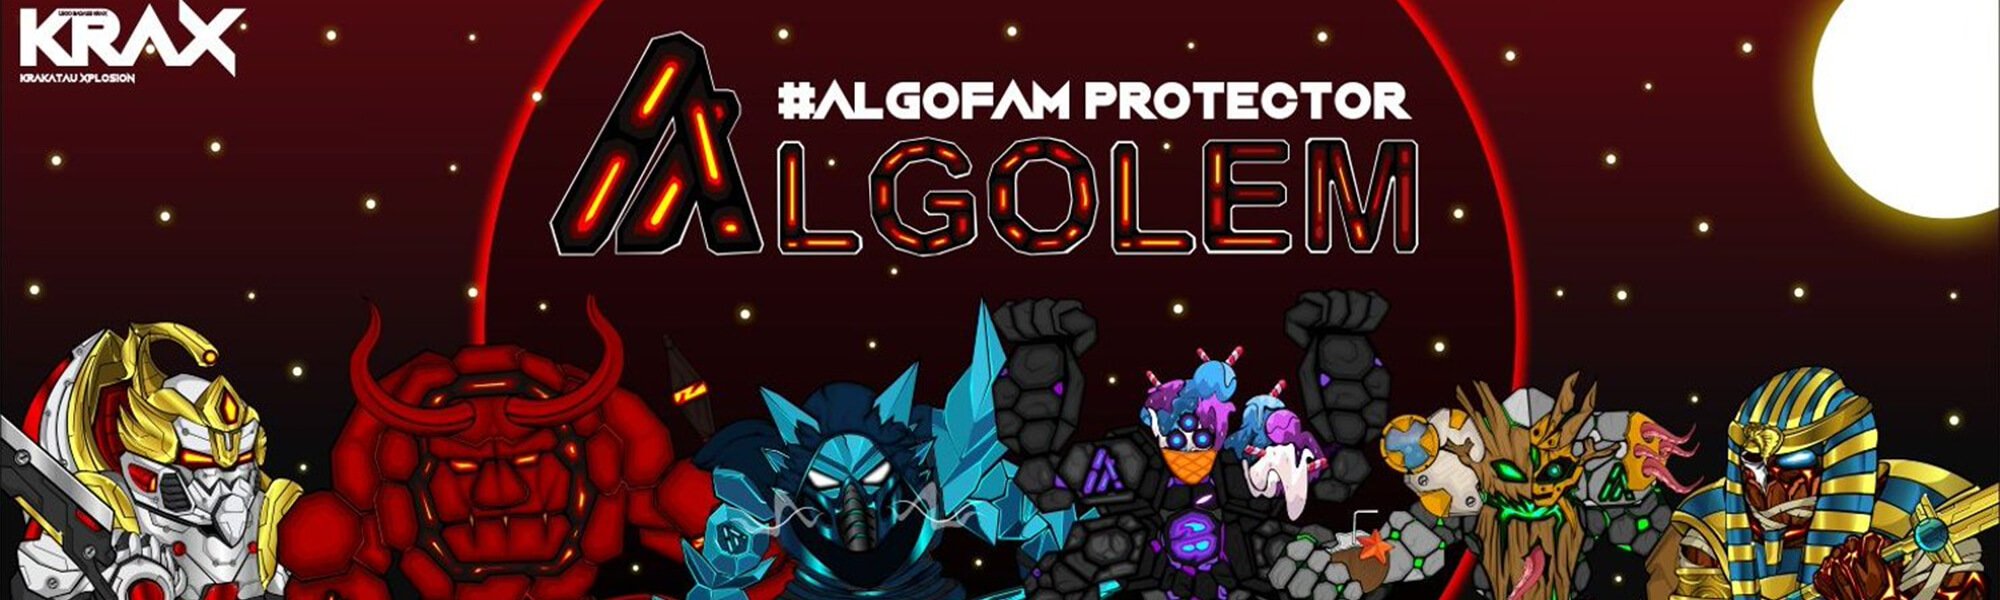 KRAX THE ALGOLEM banner